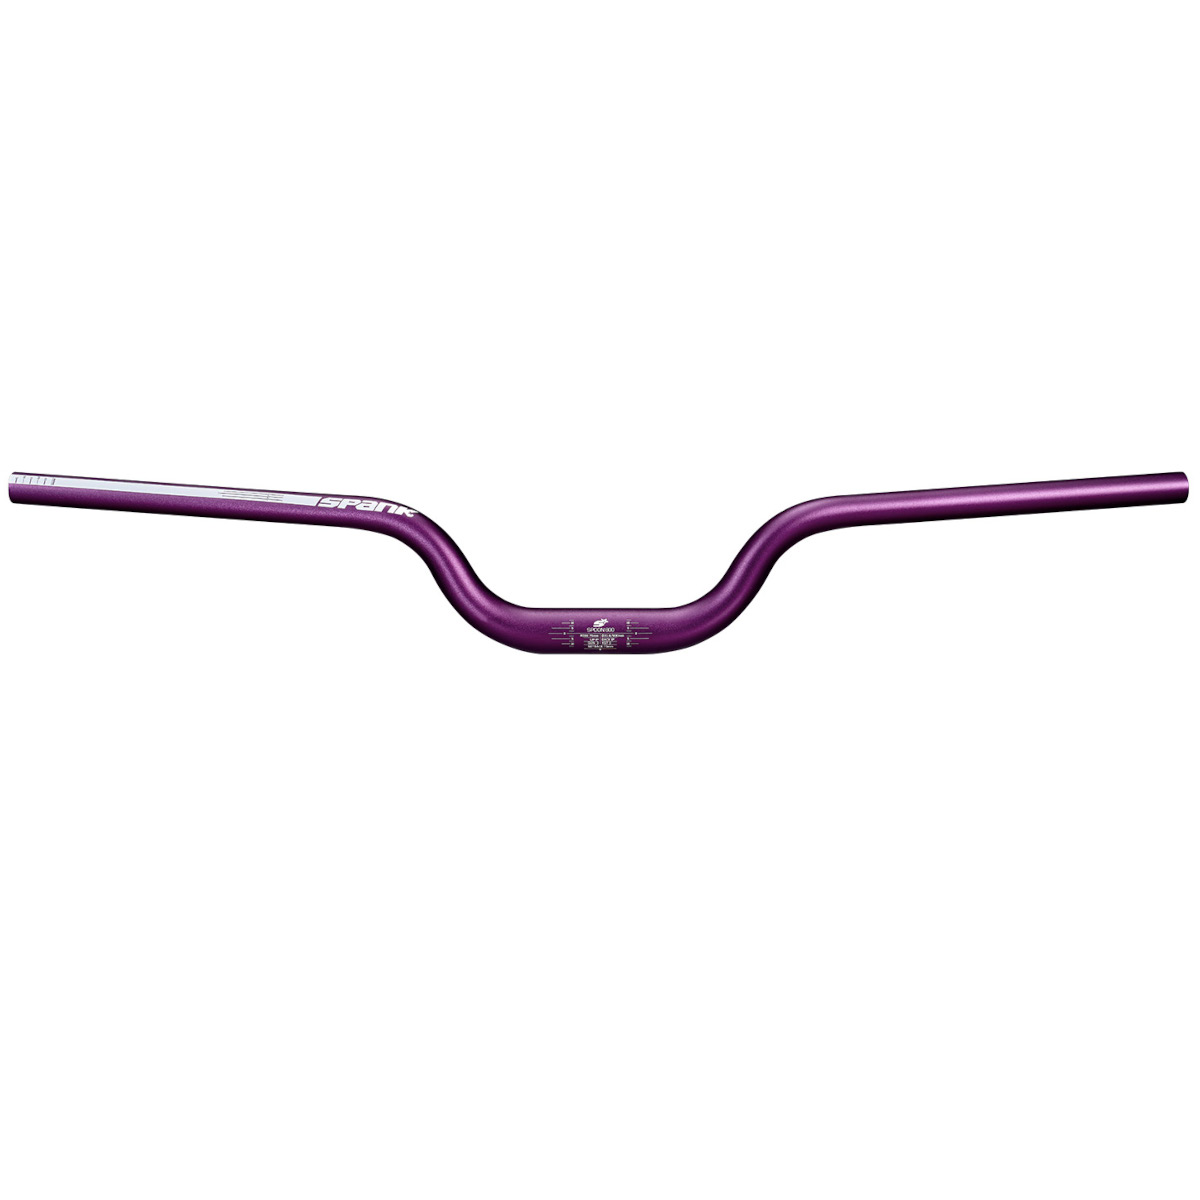 Productfoto van Spank Spoon 800 MTB Handlebar - purple